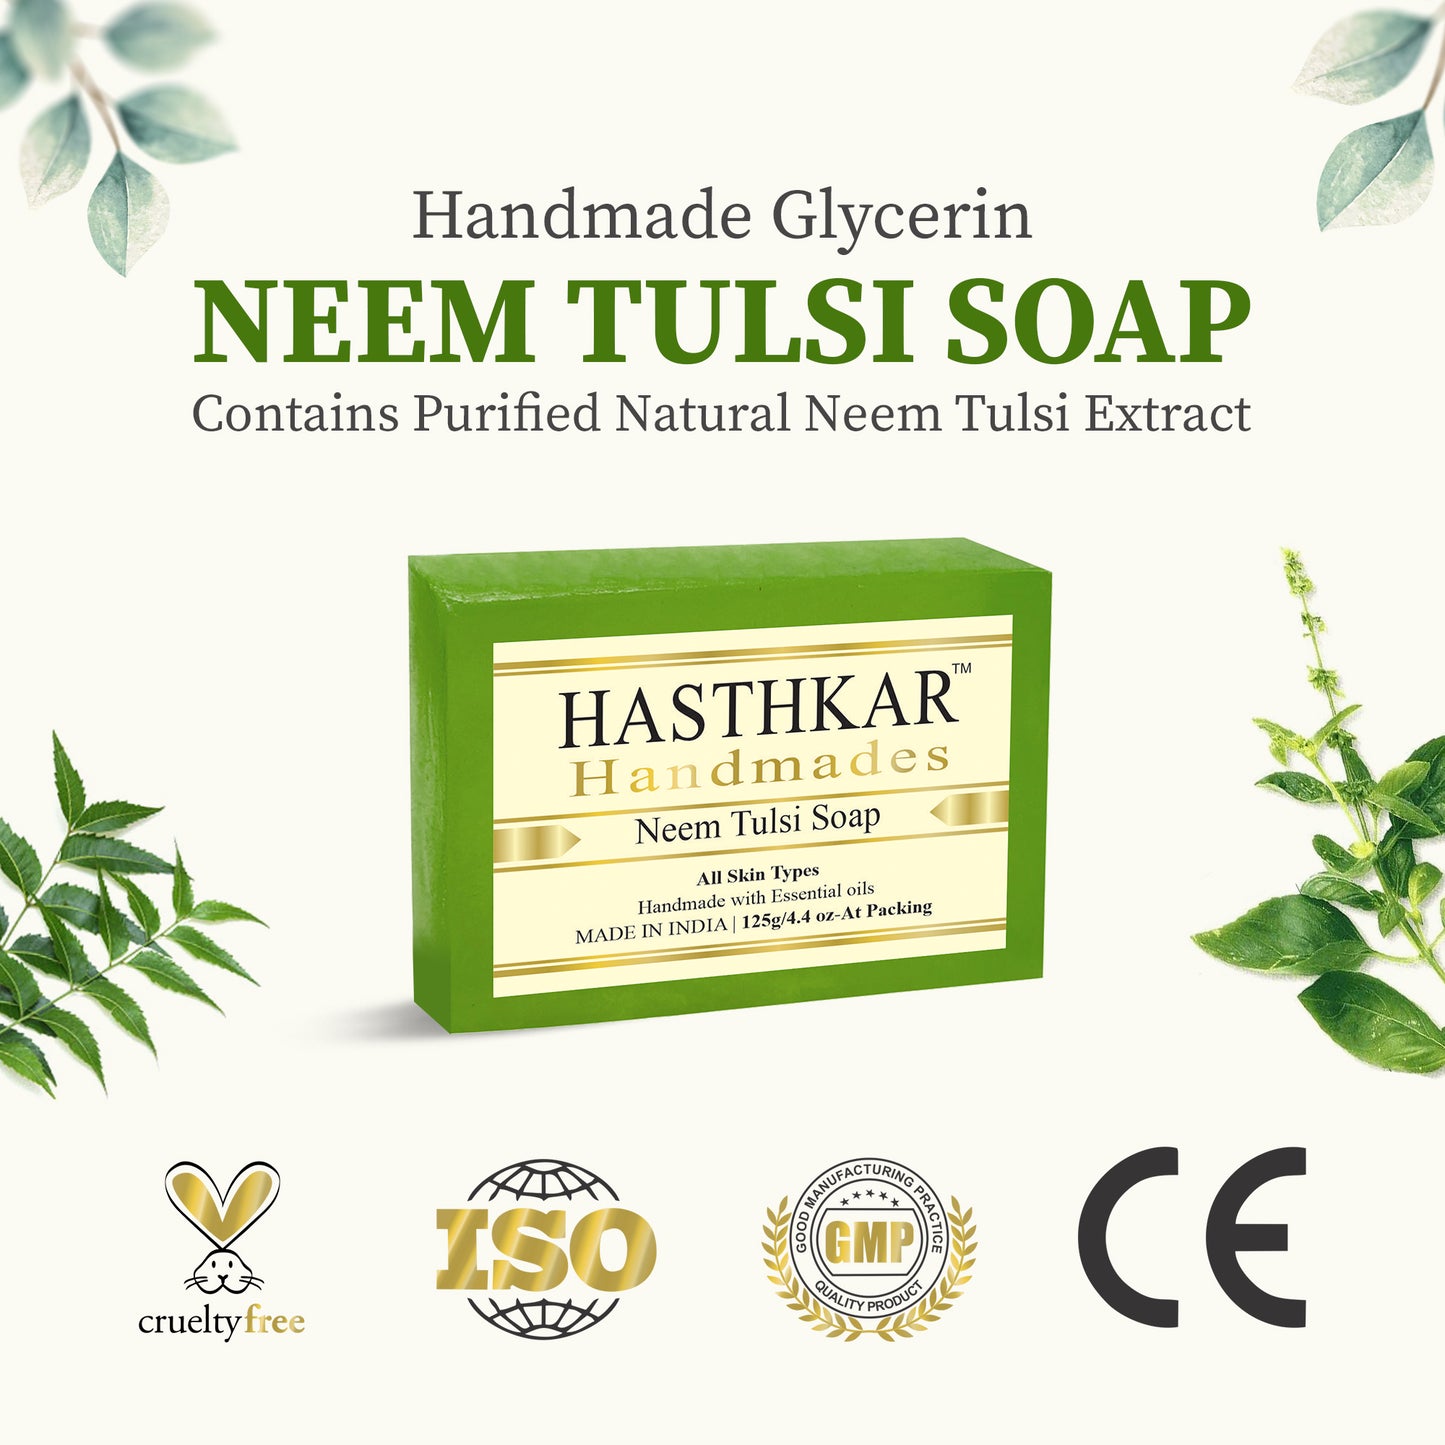 Hasthkar Handmades Glycerine Neem tulsi Soap 125gm Pack of 2